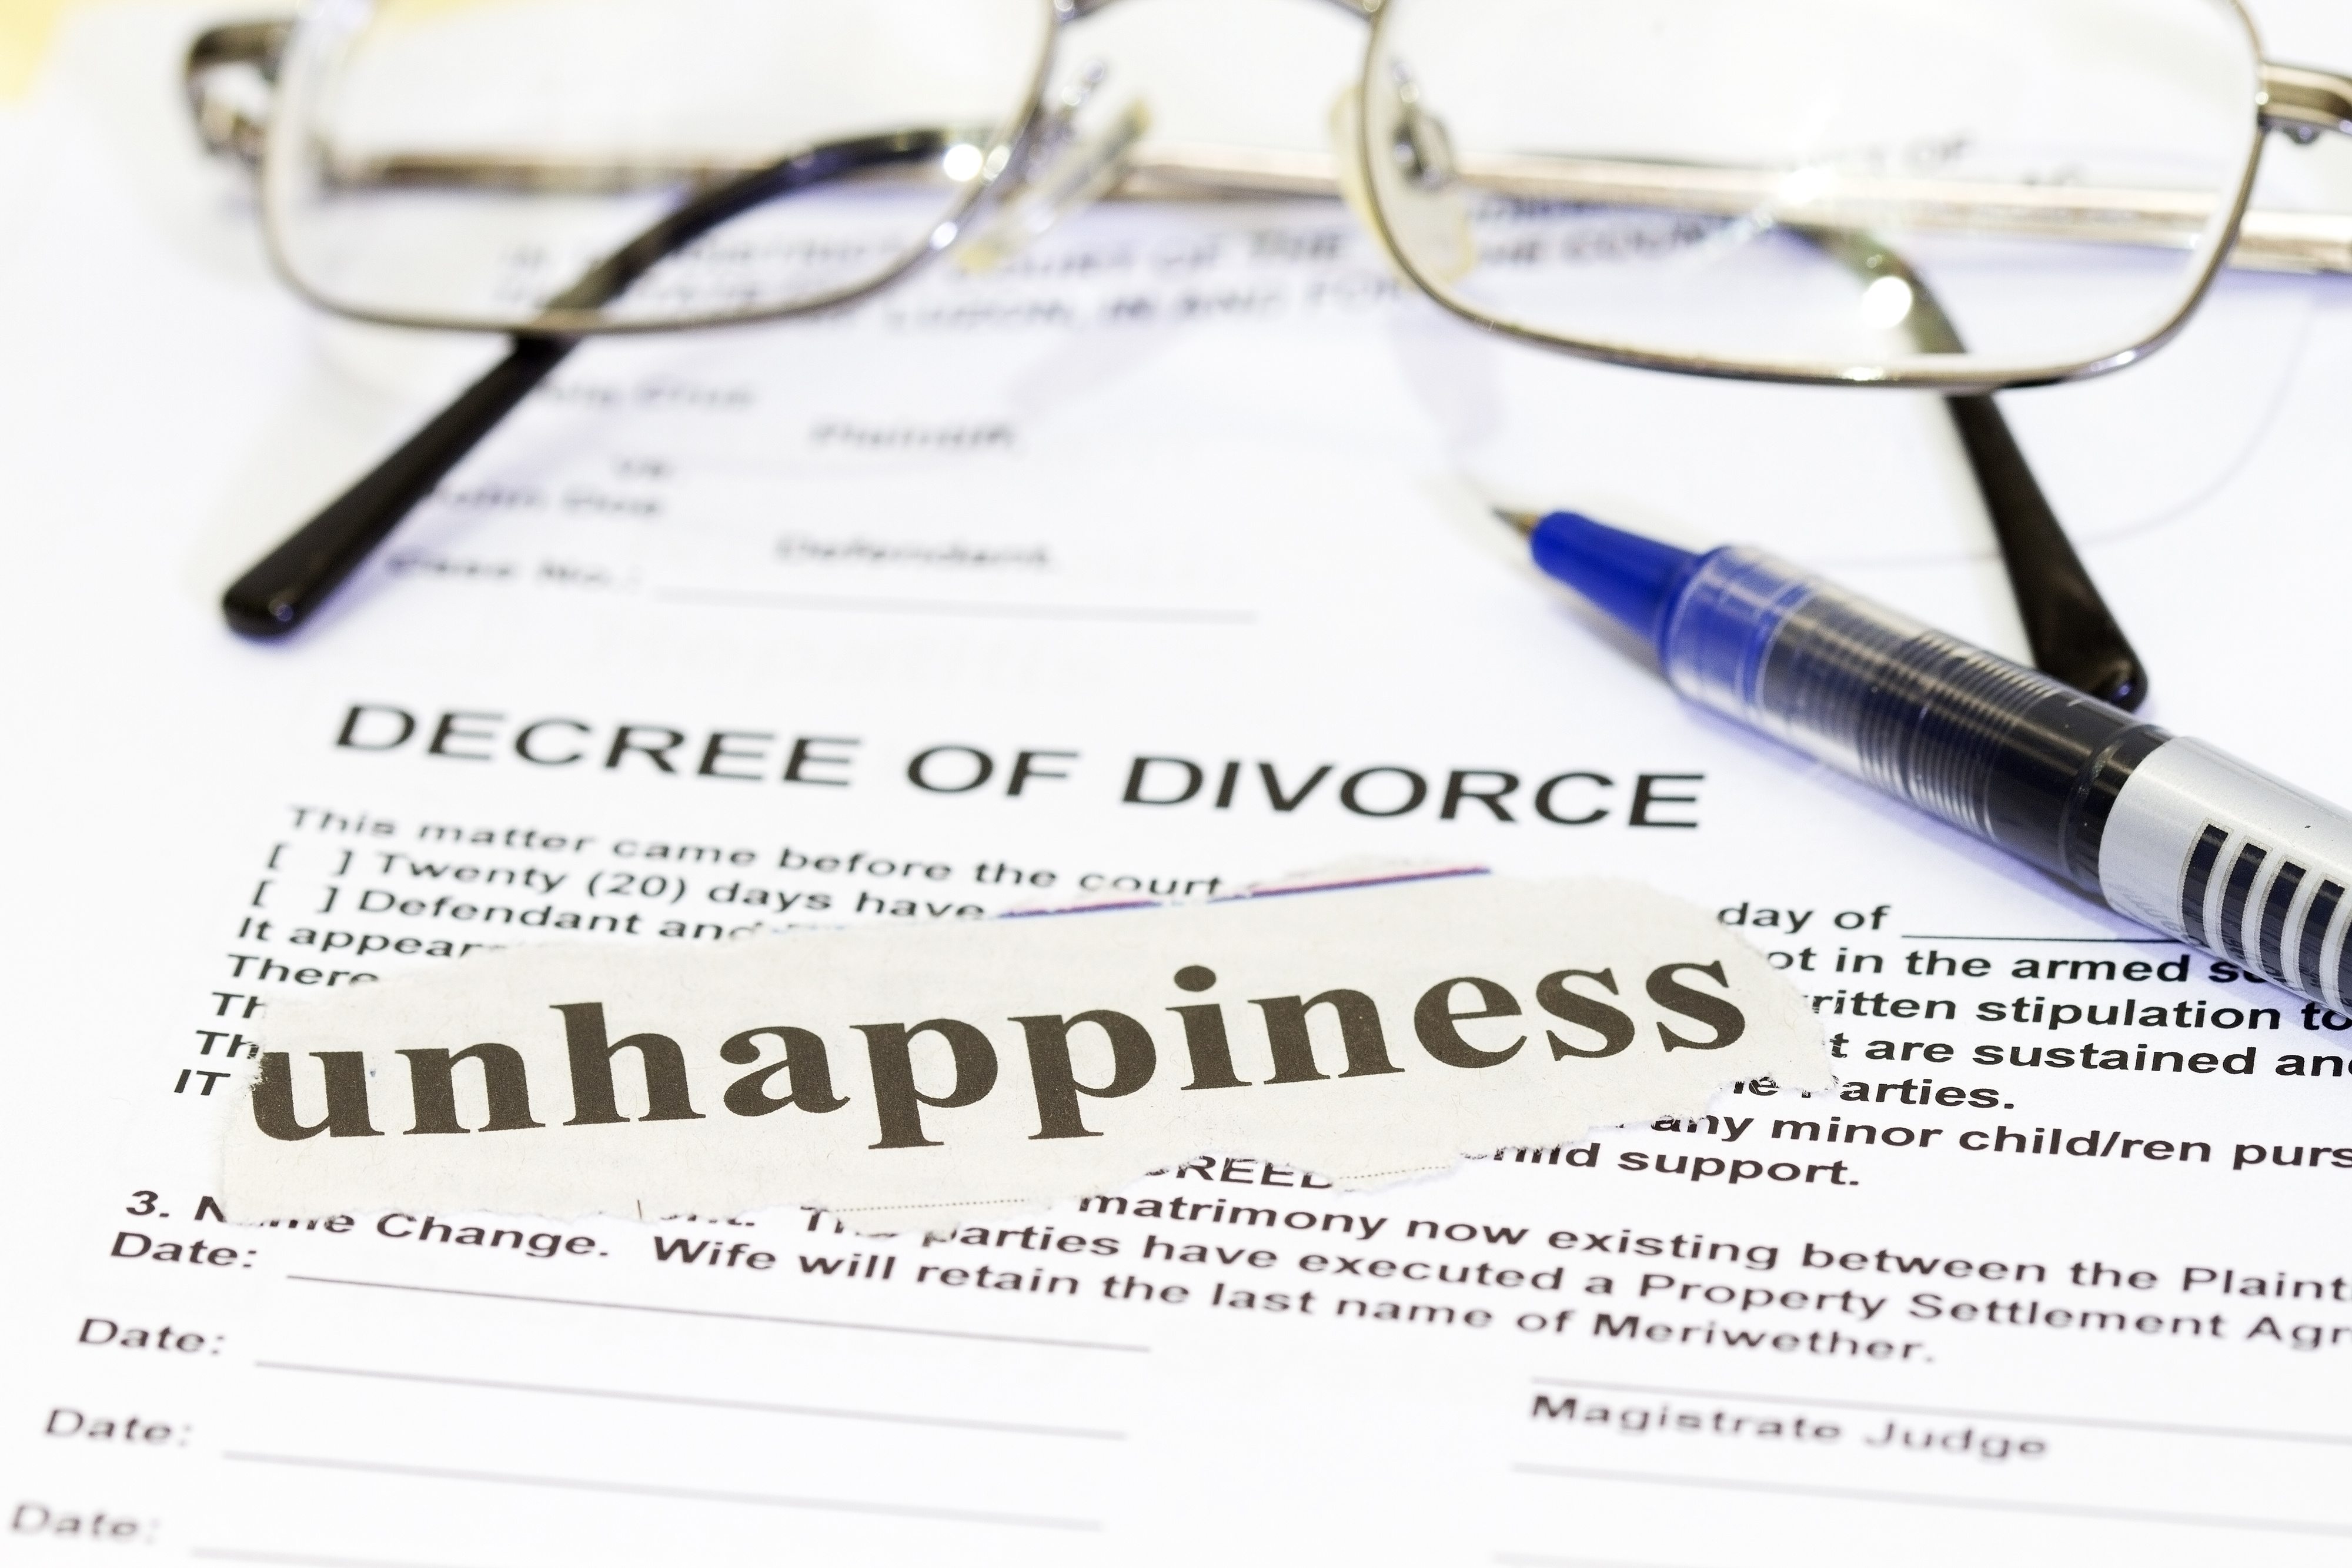 I failed to divorce. Divorce decree Envelope.